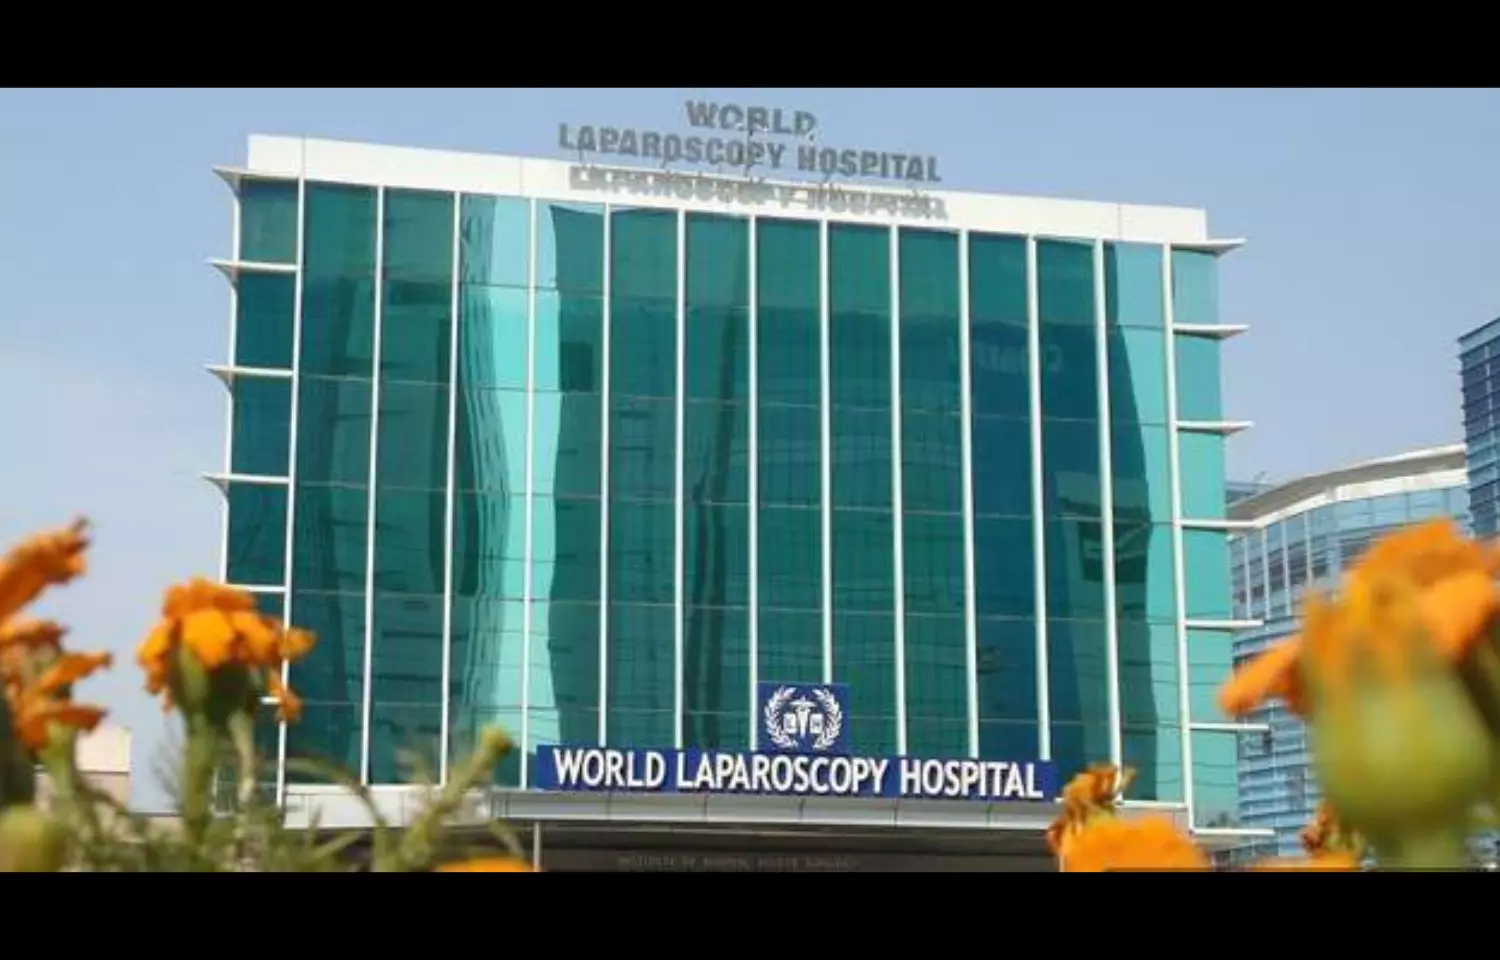 World Laparoscopy Hospital opens new institutes in UAE, USA